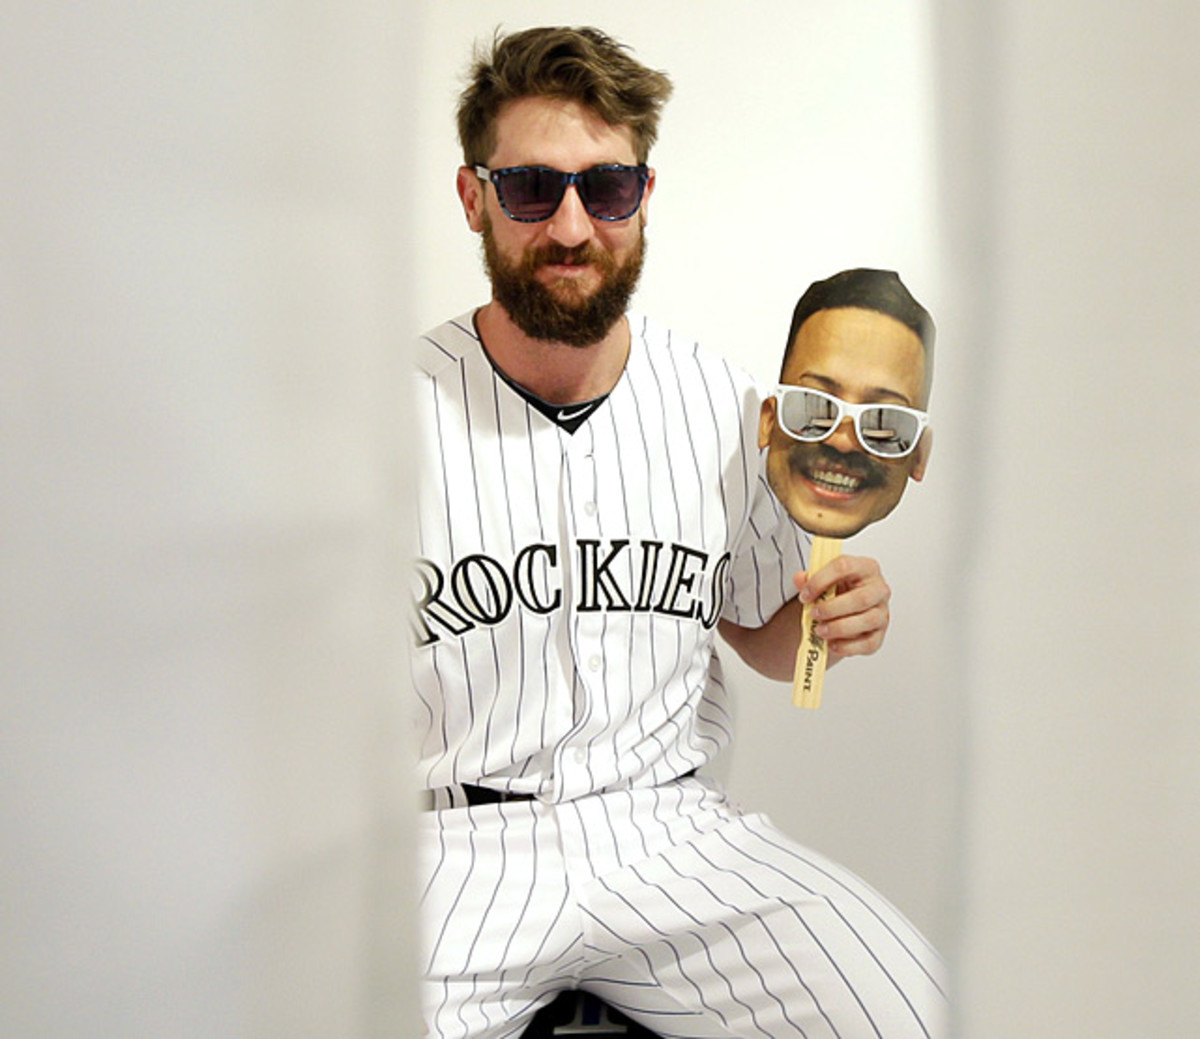 Funny MLB Photo Day Portraits - Sports Illustrated